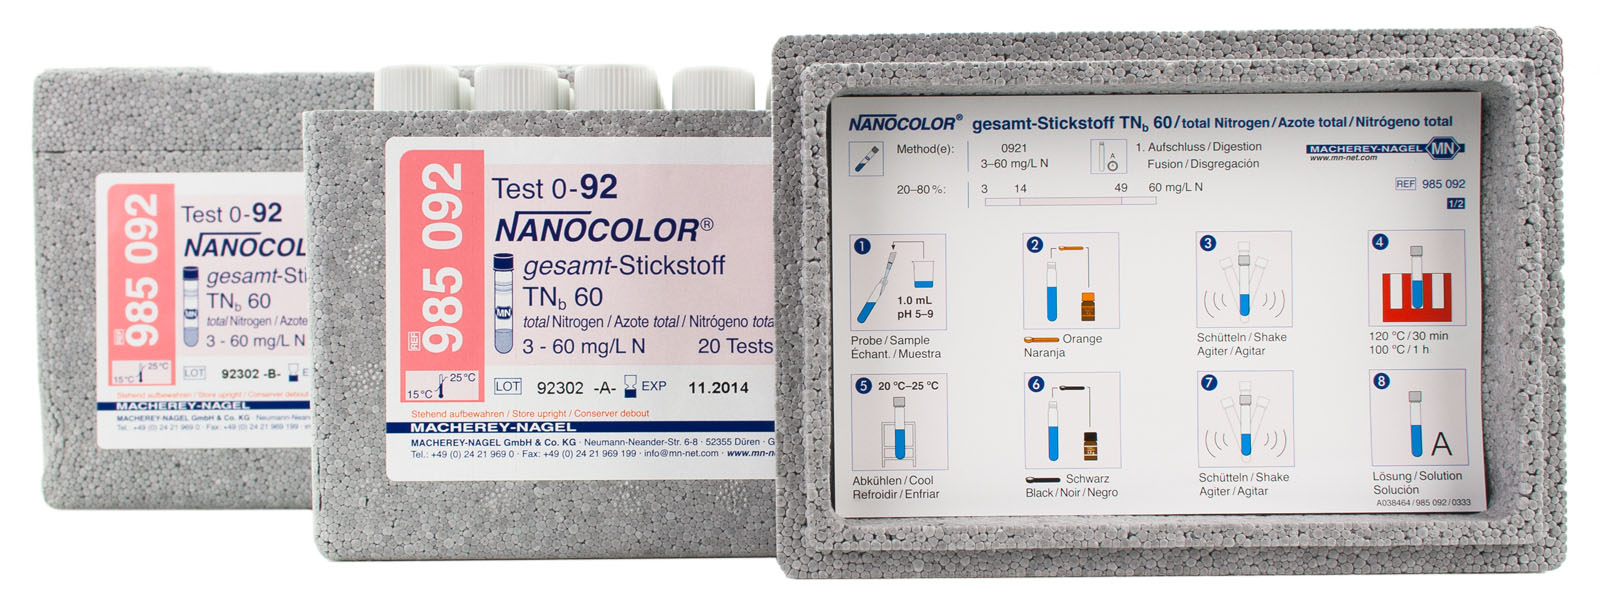 RUK NANOCOLOR- gesamt-Stickstoff TNb 60